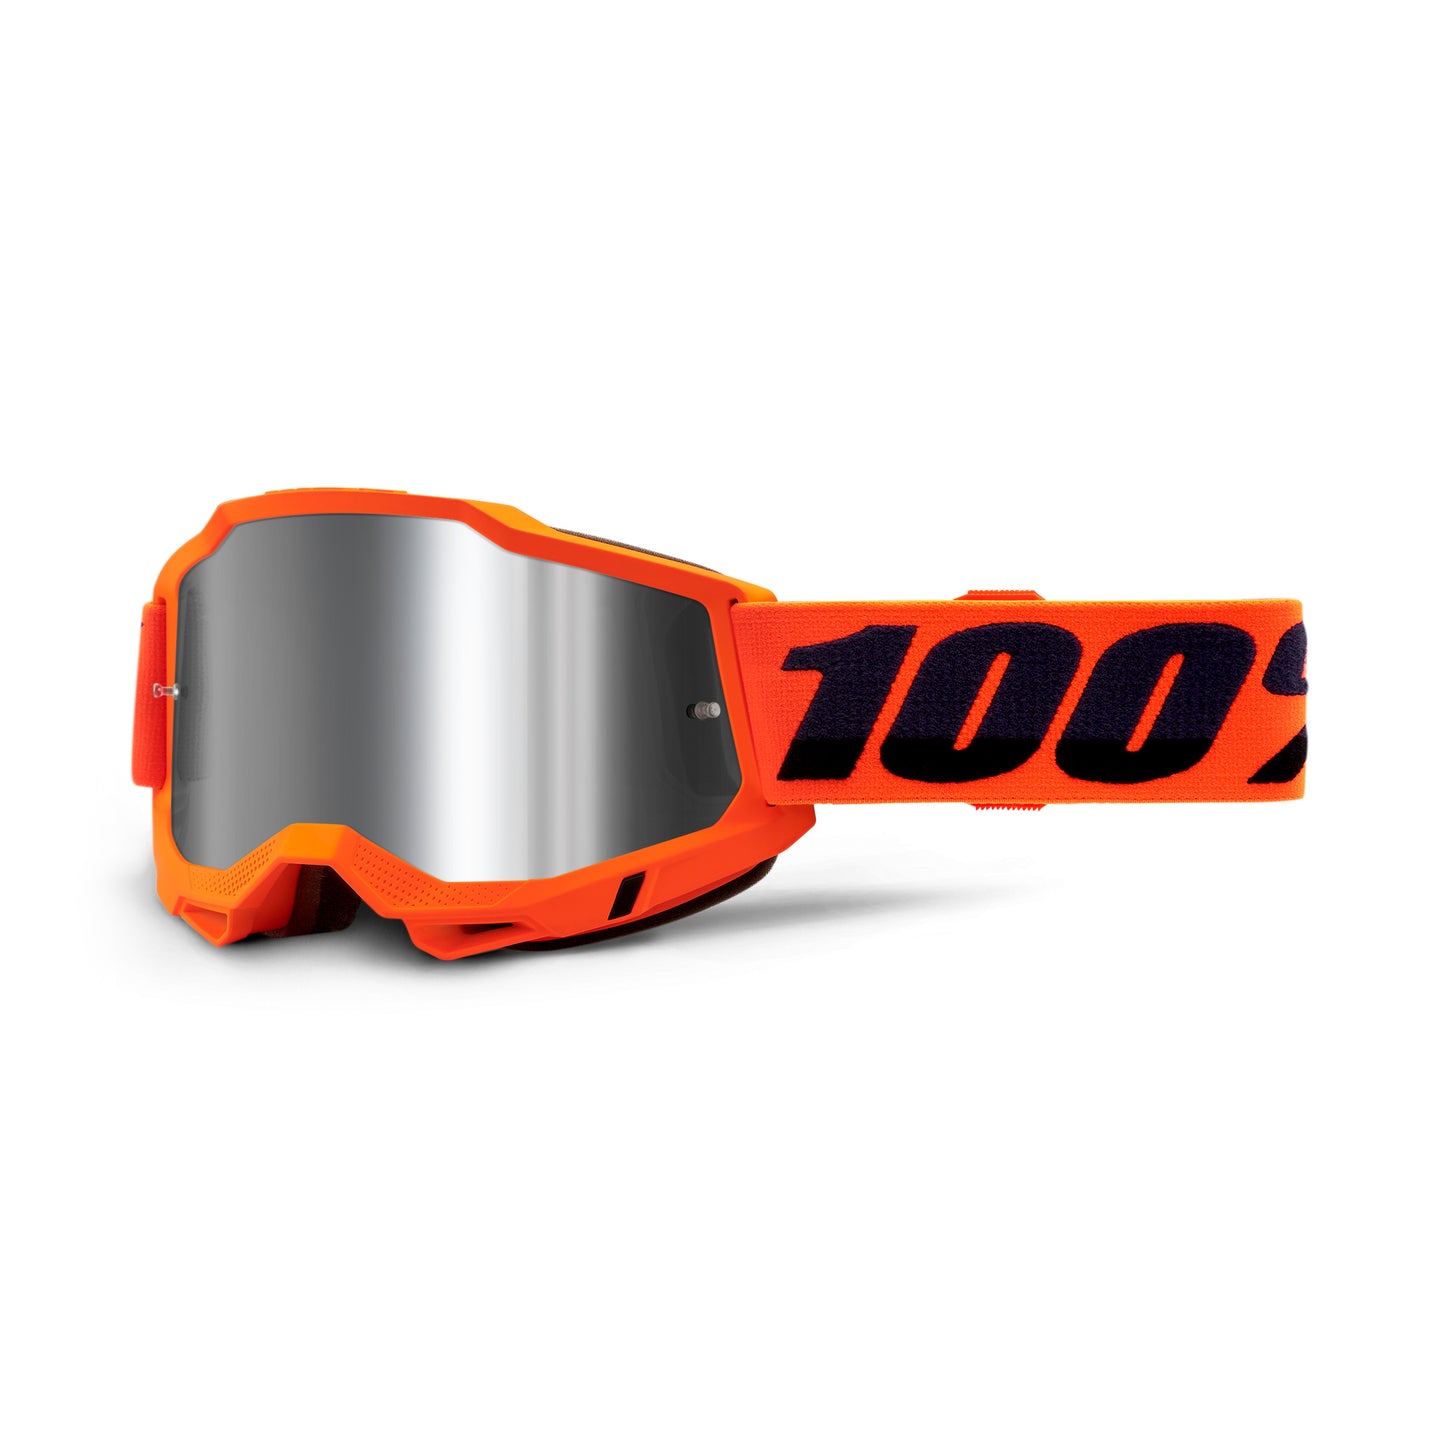 100 Percent Accuri 2 Goggles - One Size Fits Most - Orange - Silver Mirror Lens